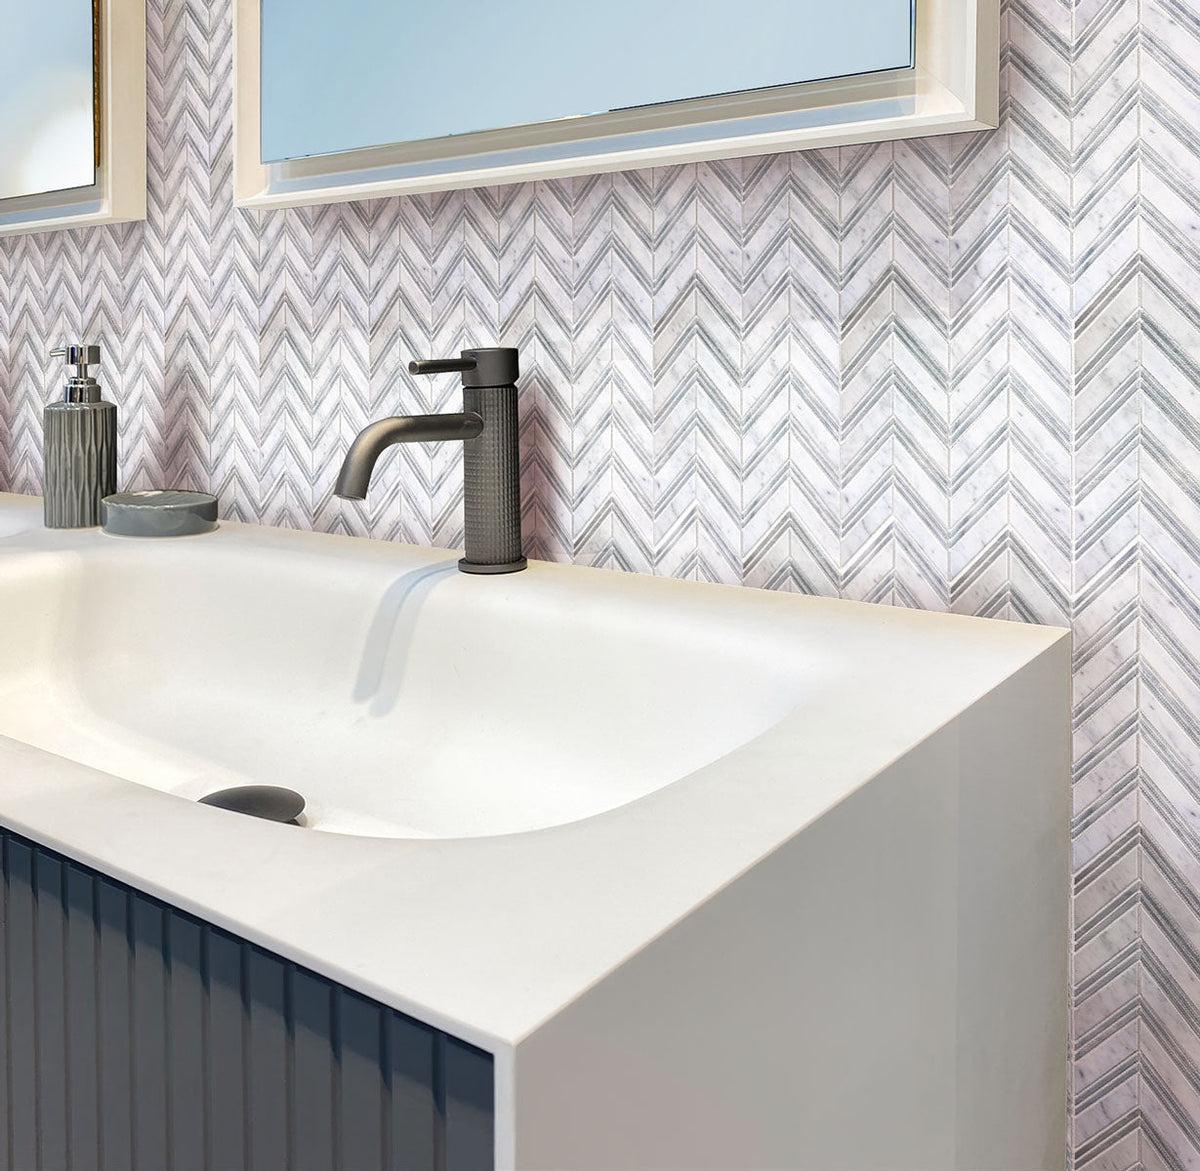 WHite & grey bathroom with Nova Chevron Carrara Marble Tile backsplash